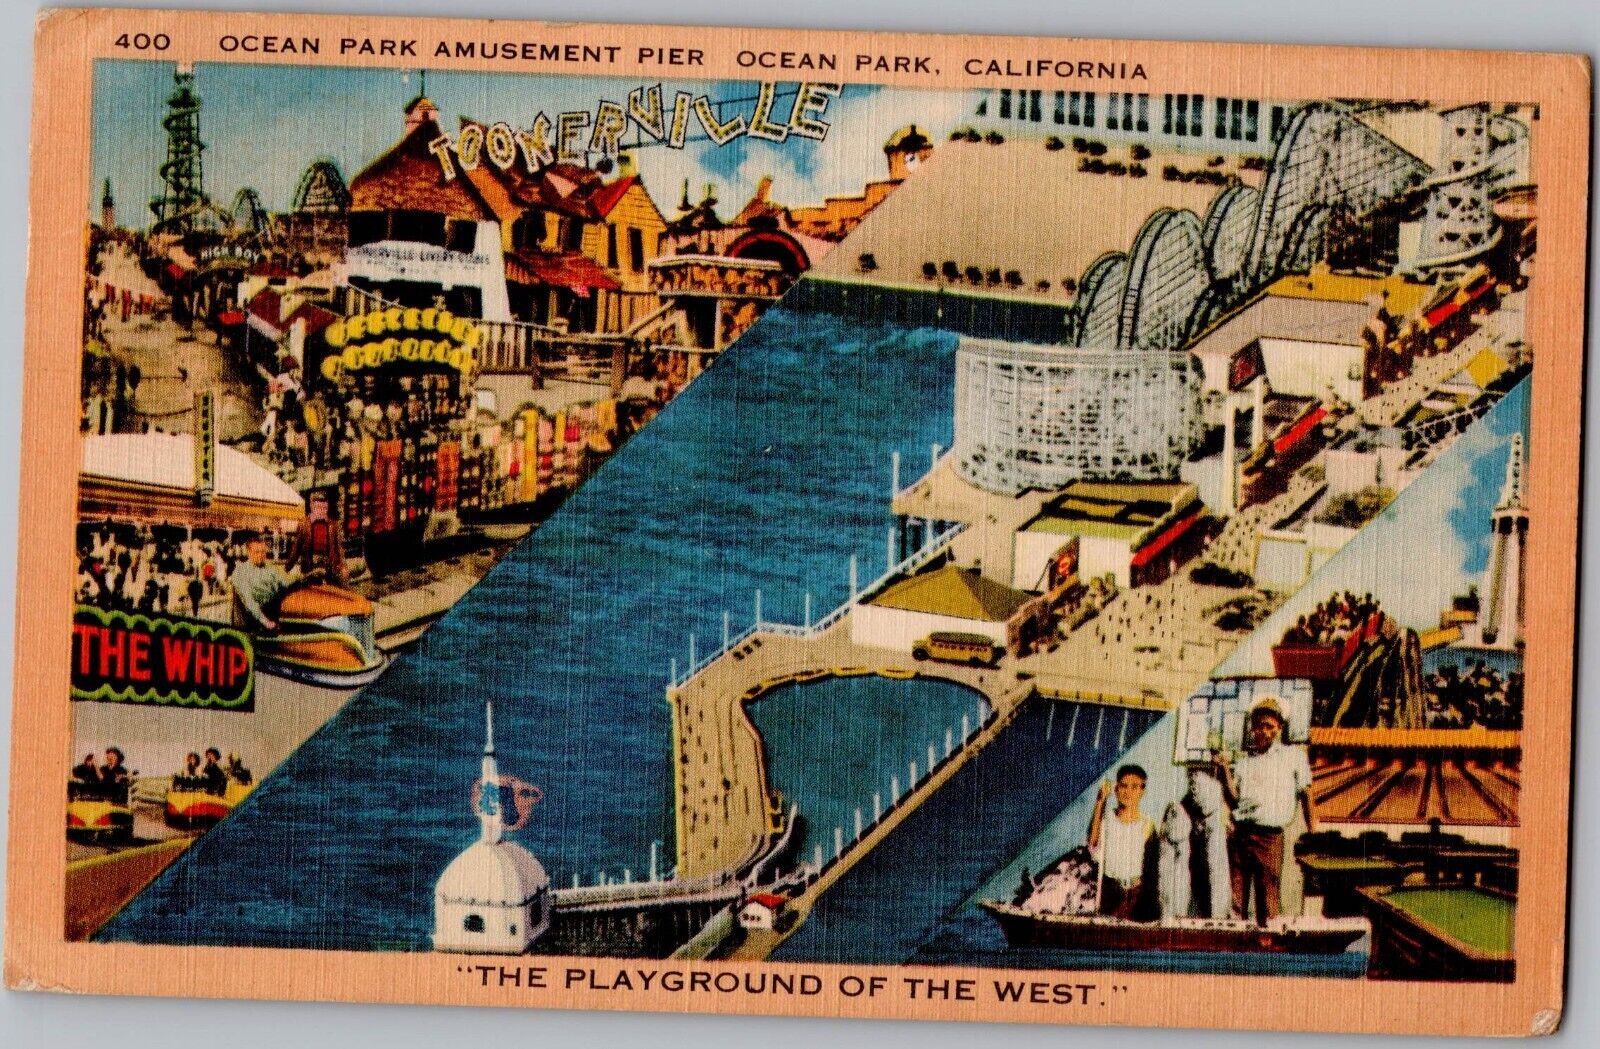 1951 Ocean Park, California Amusement Pier Playground to the West Postcard